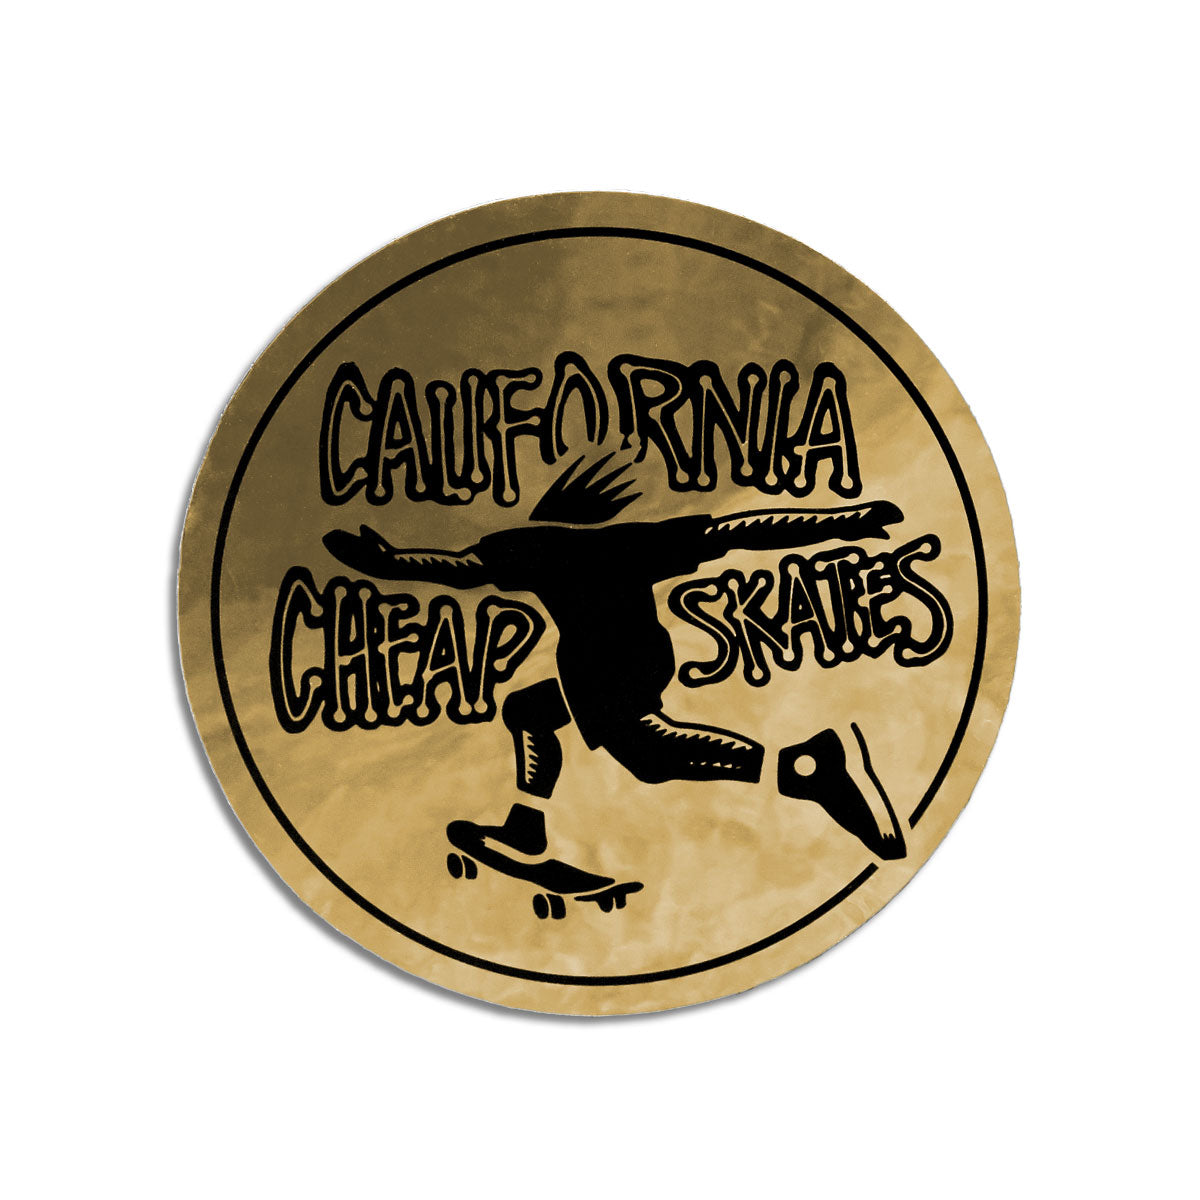 CCS Cheap Skates Sticker - Gold/Black image 1